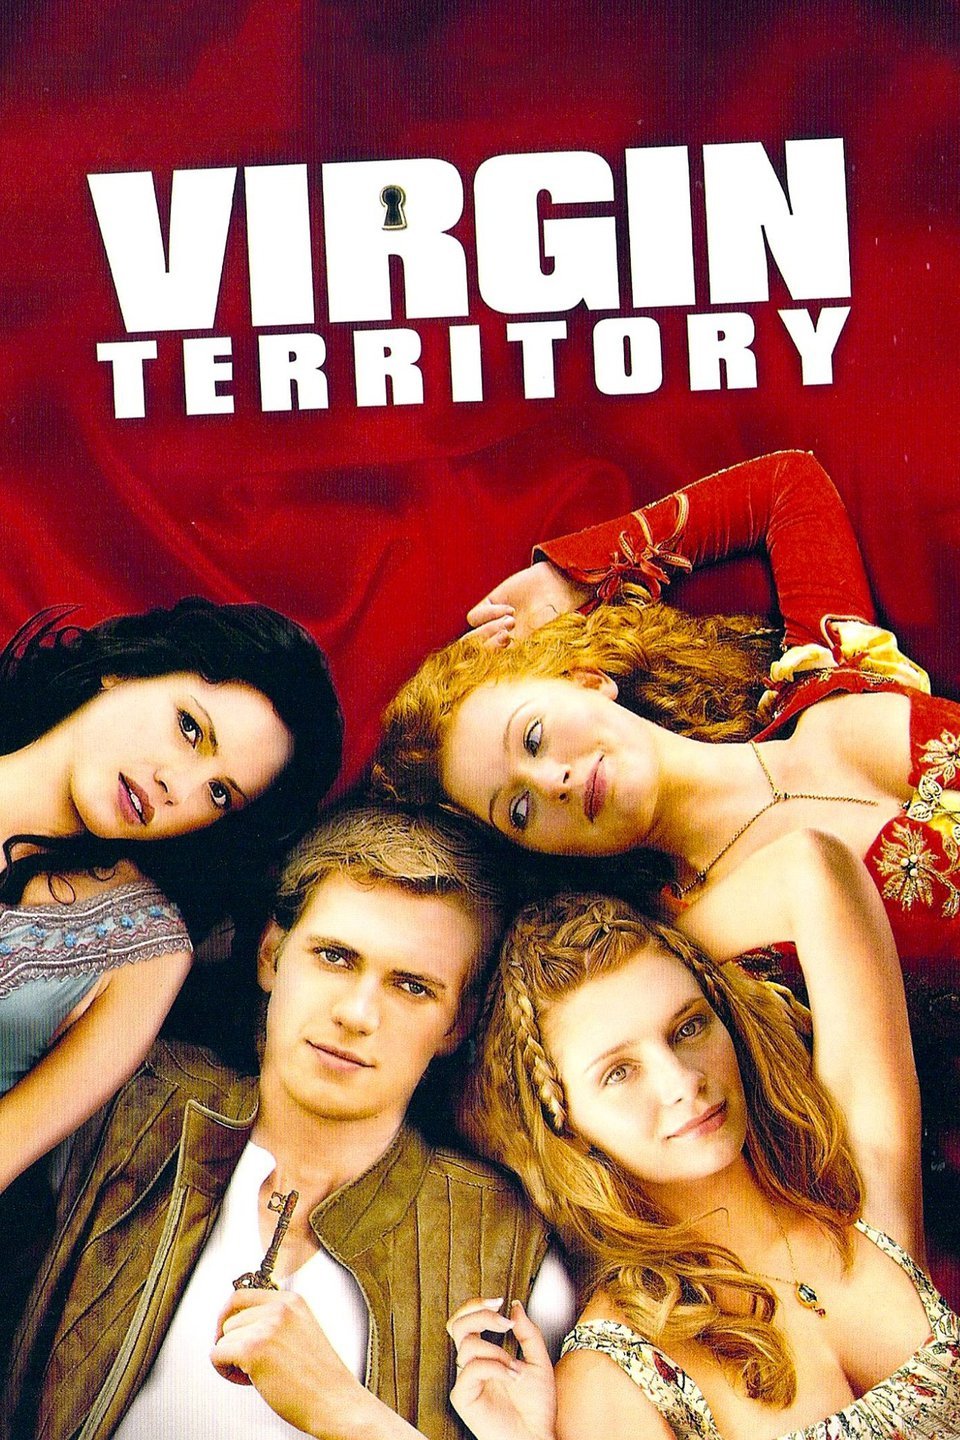 virgin territory full movie download filmywap 320kbps 1080p 480p,720p 300MB